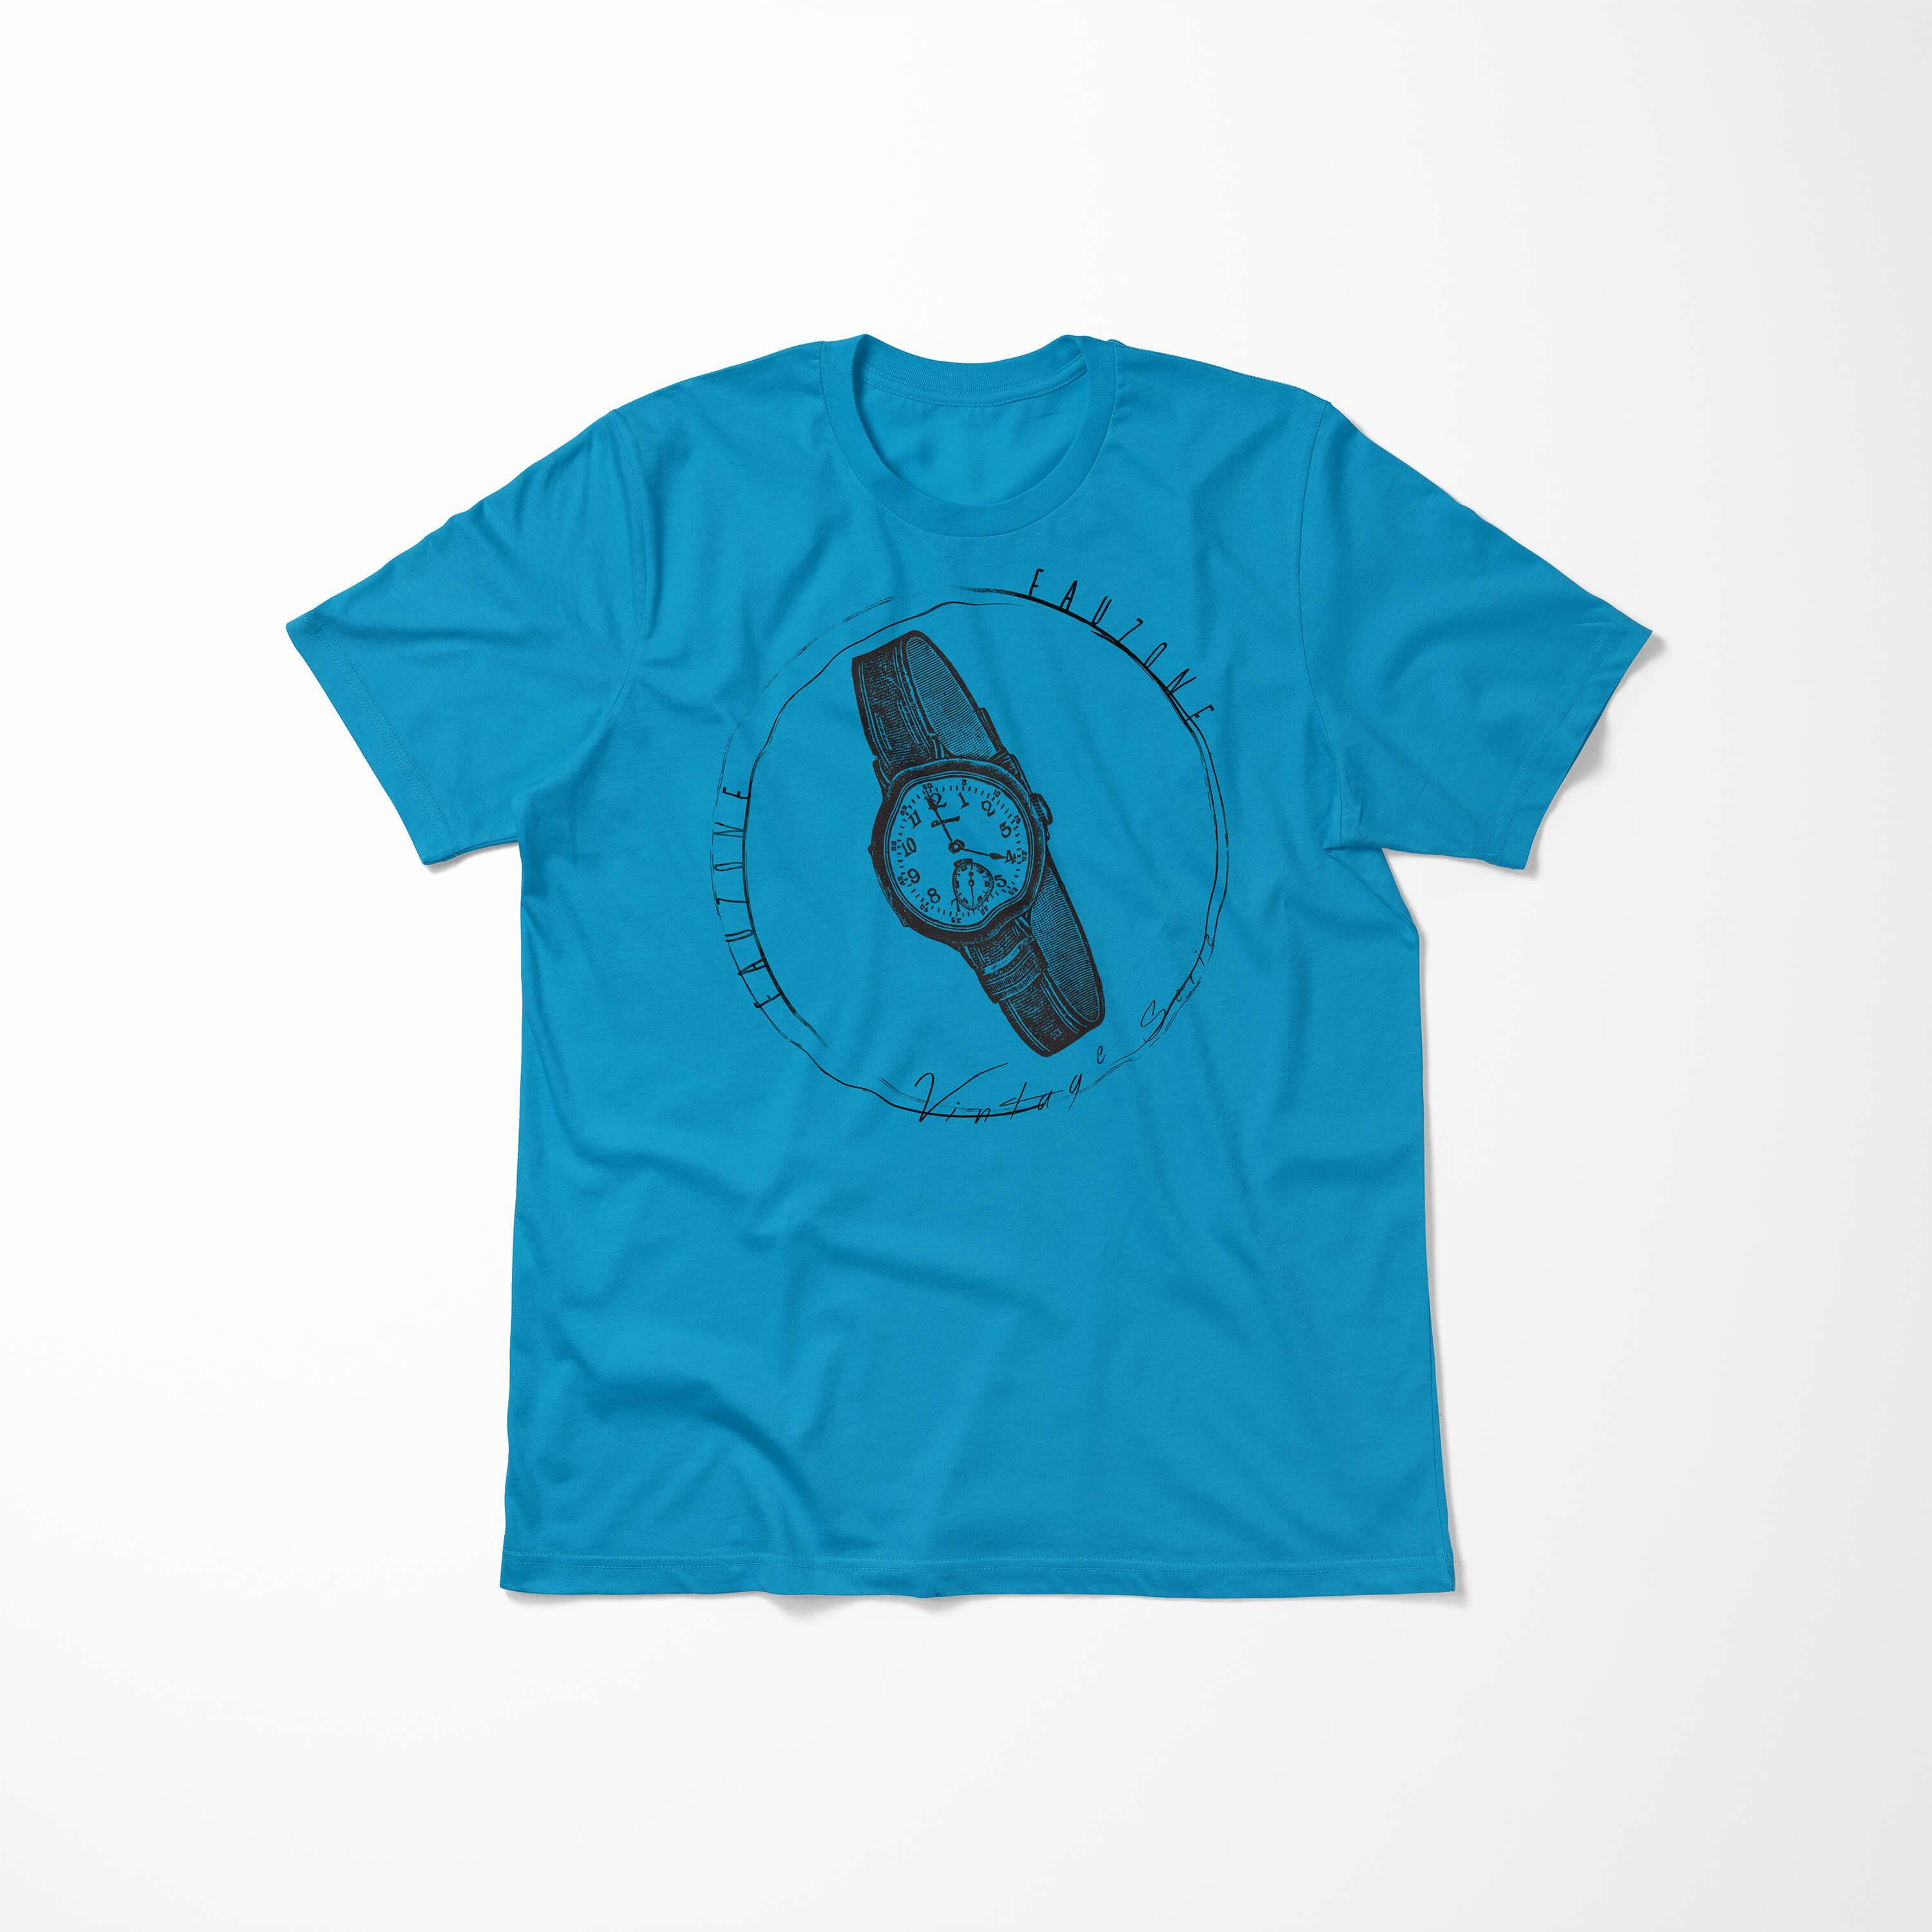 Art Sinus Armbanduhr T-Shirt Vintage T-Shirt Herren Atoll